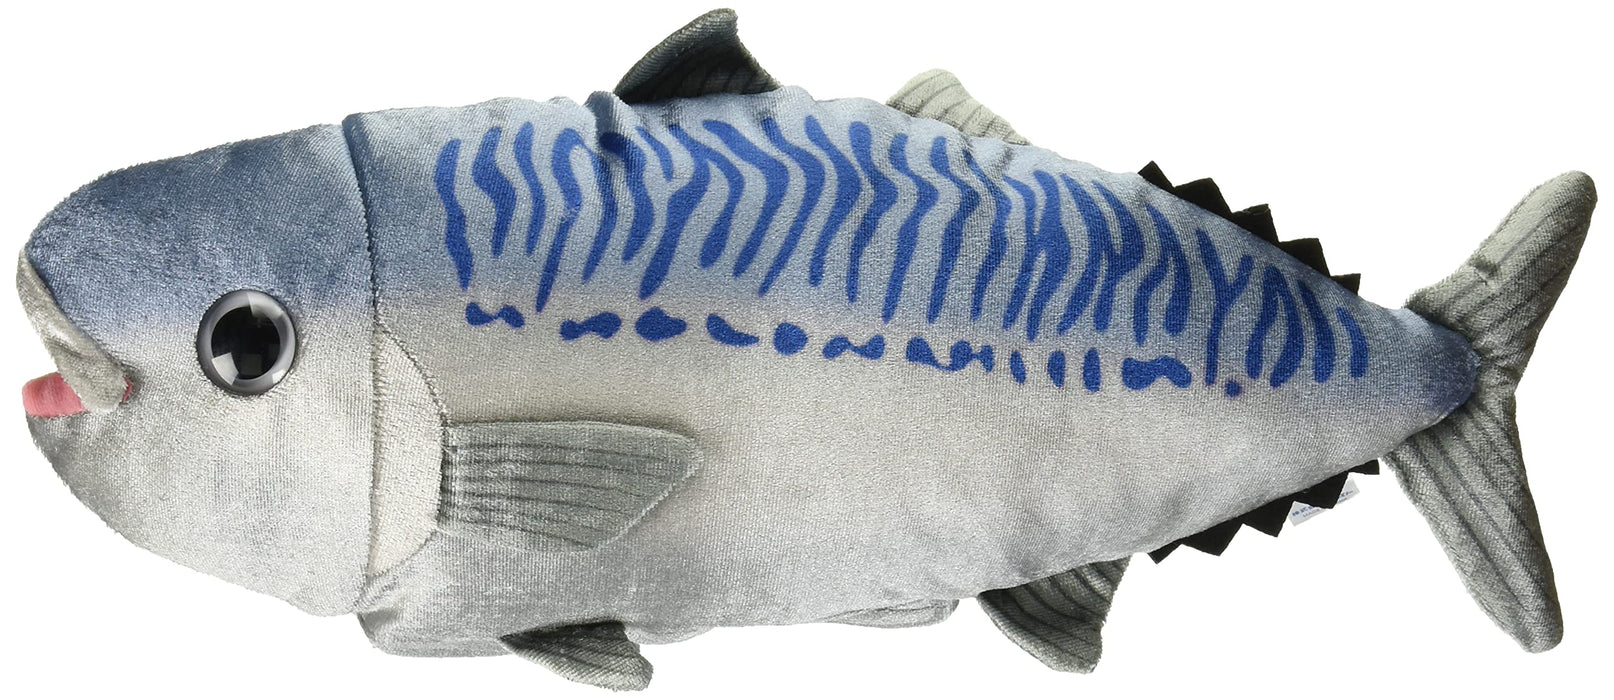 Ost Bull Bull Fish Mackerel 8202-291